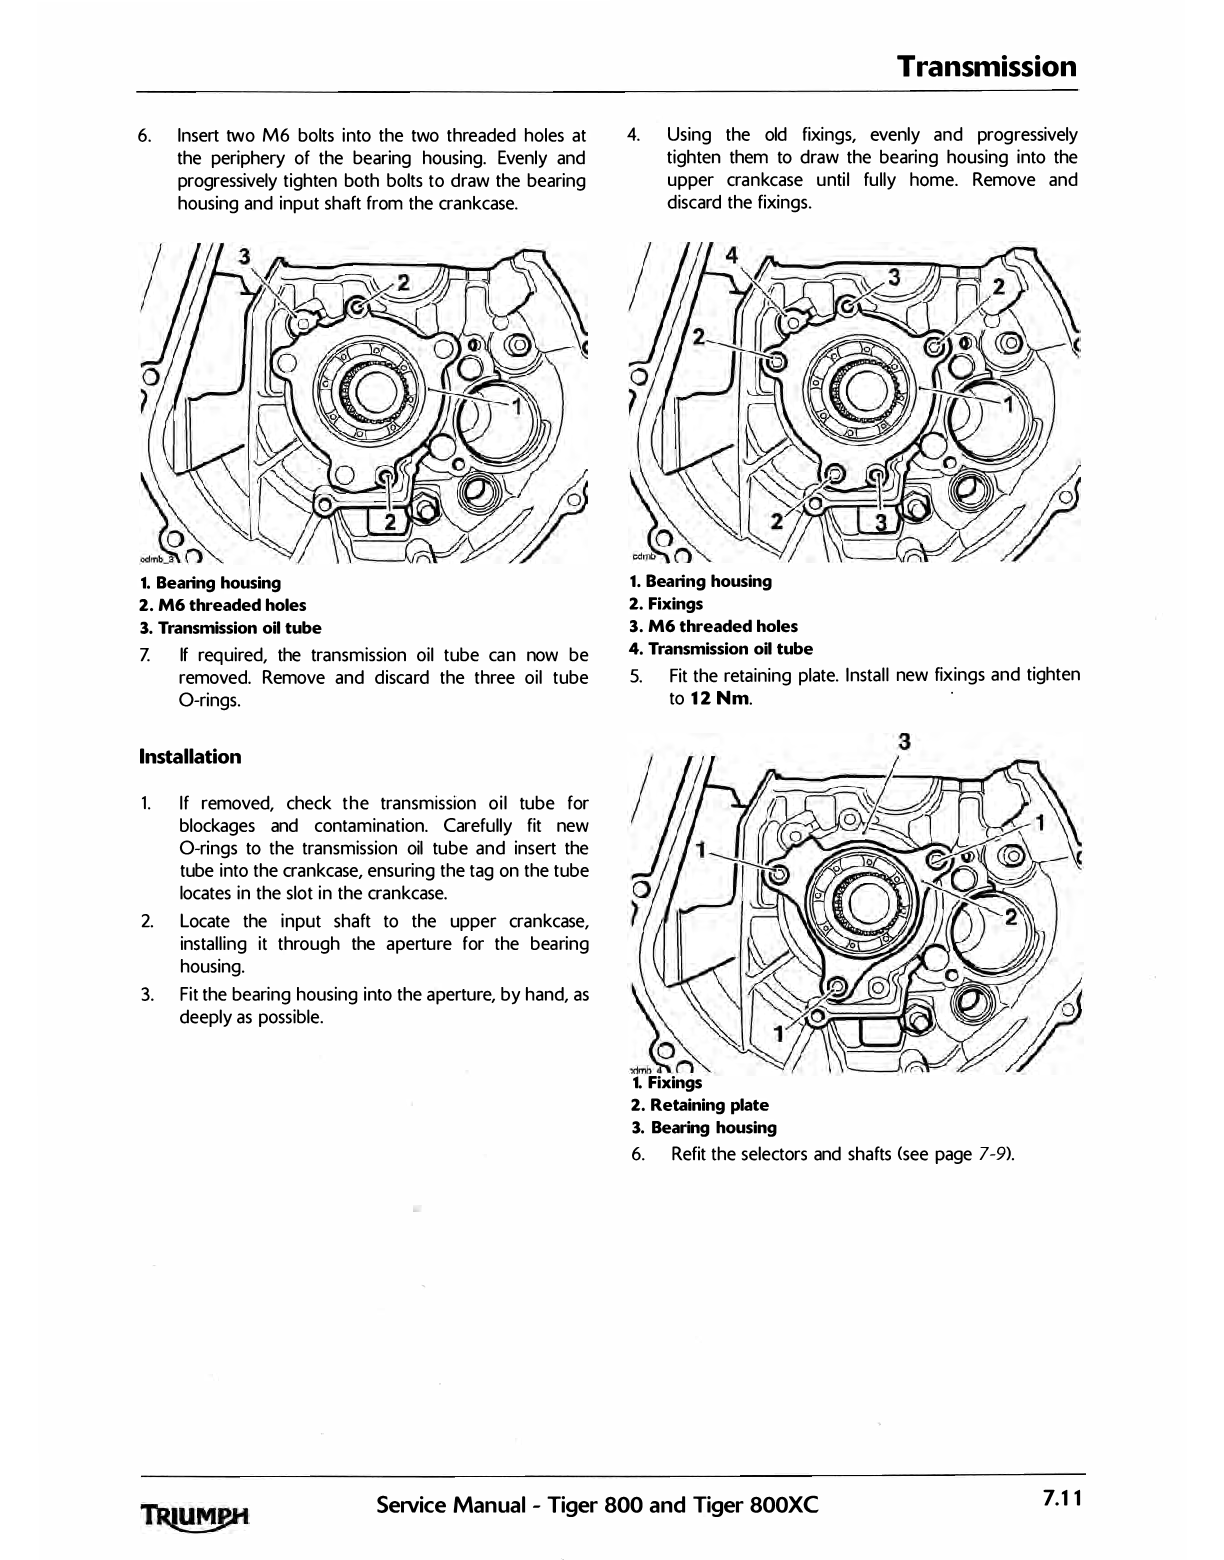 2010-2014 Triumph Tiger 800XC Service Manual